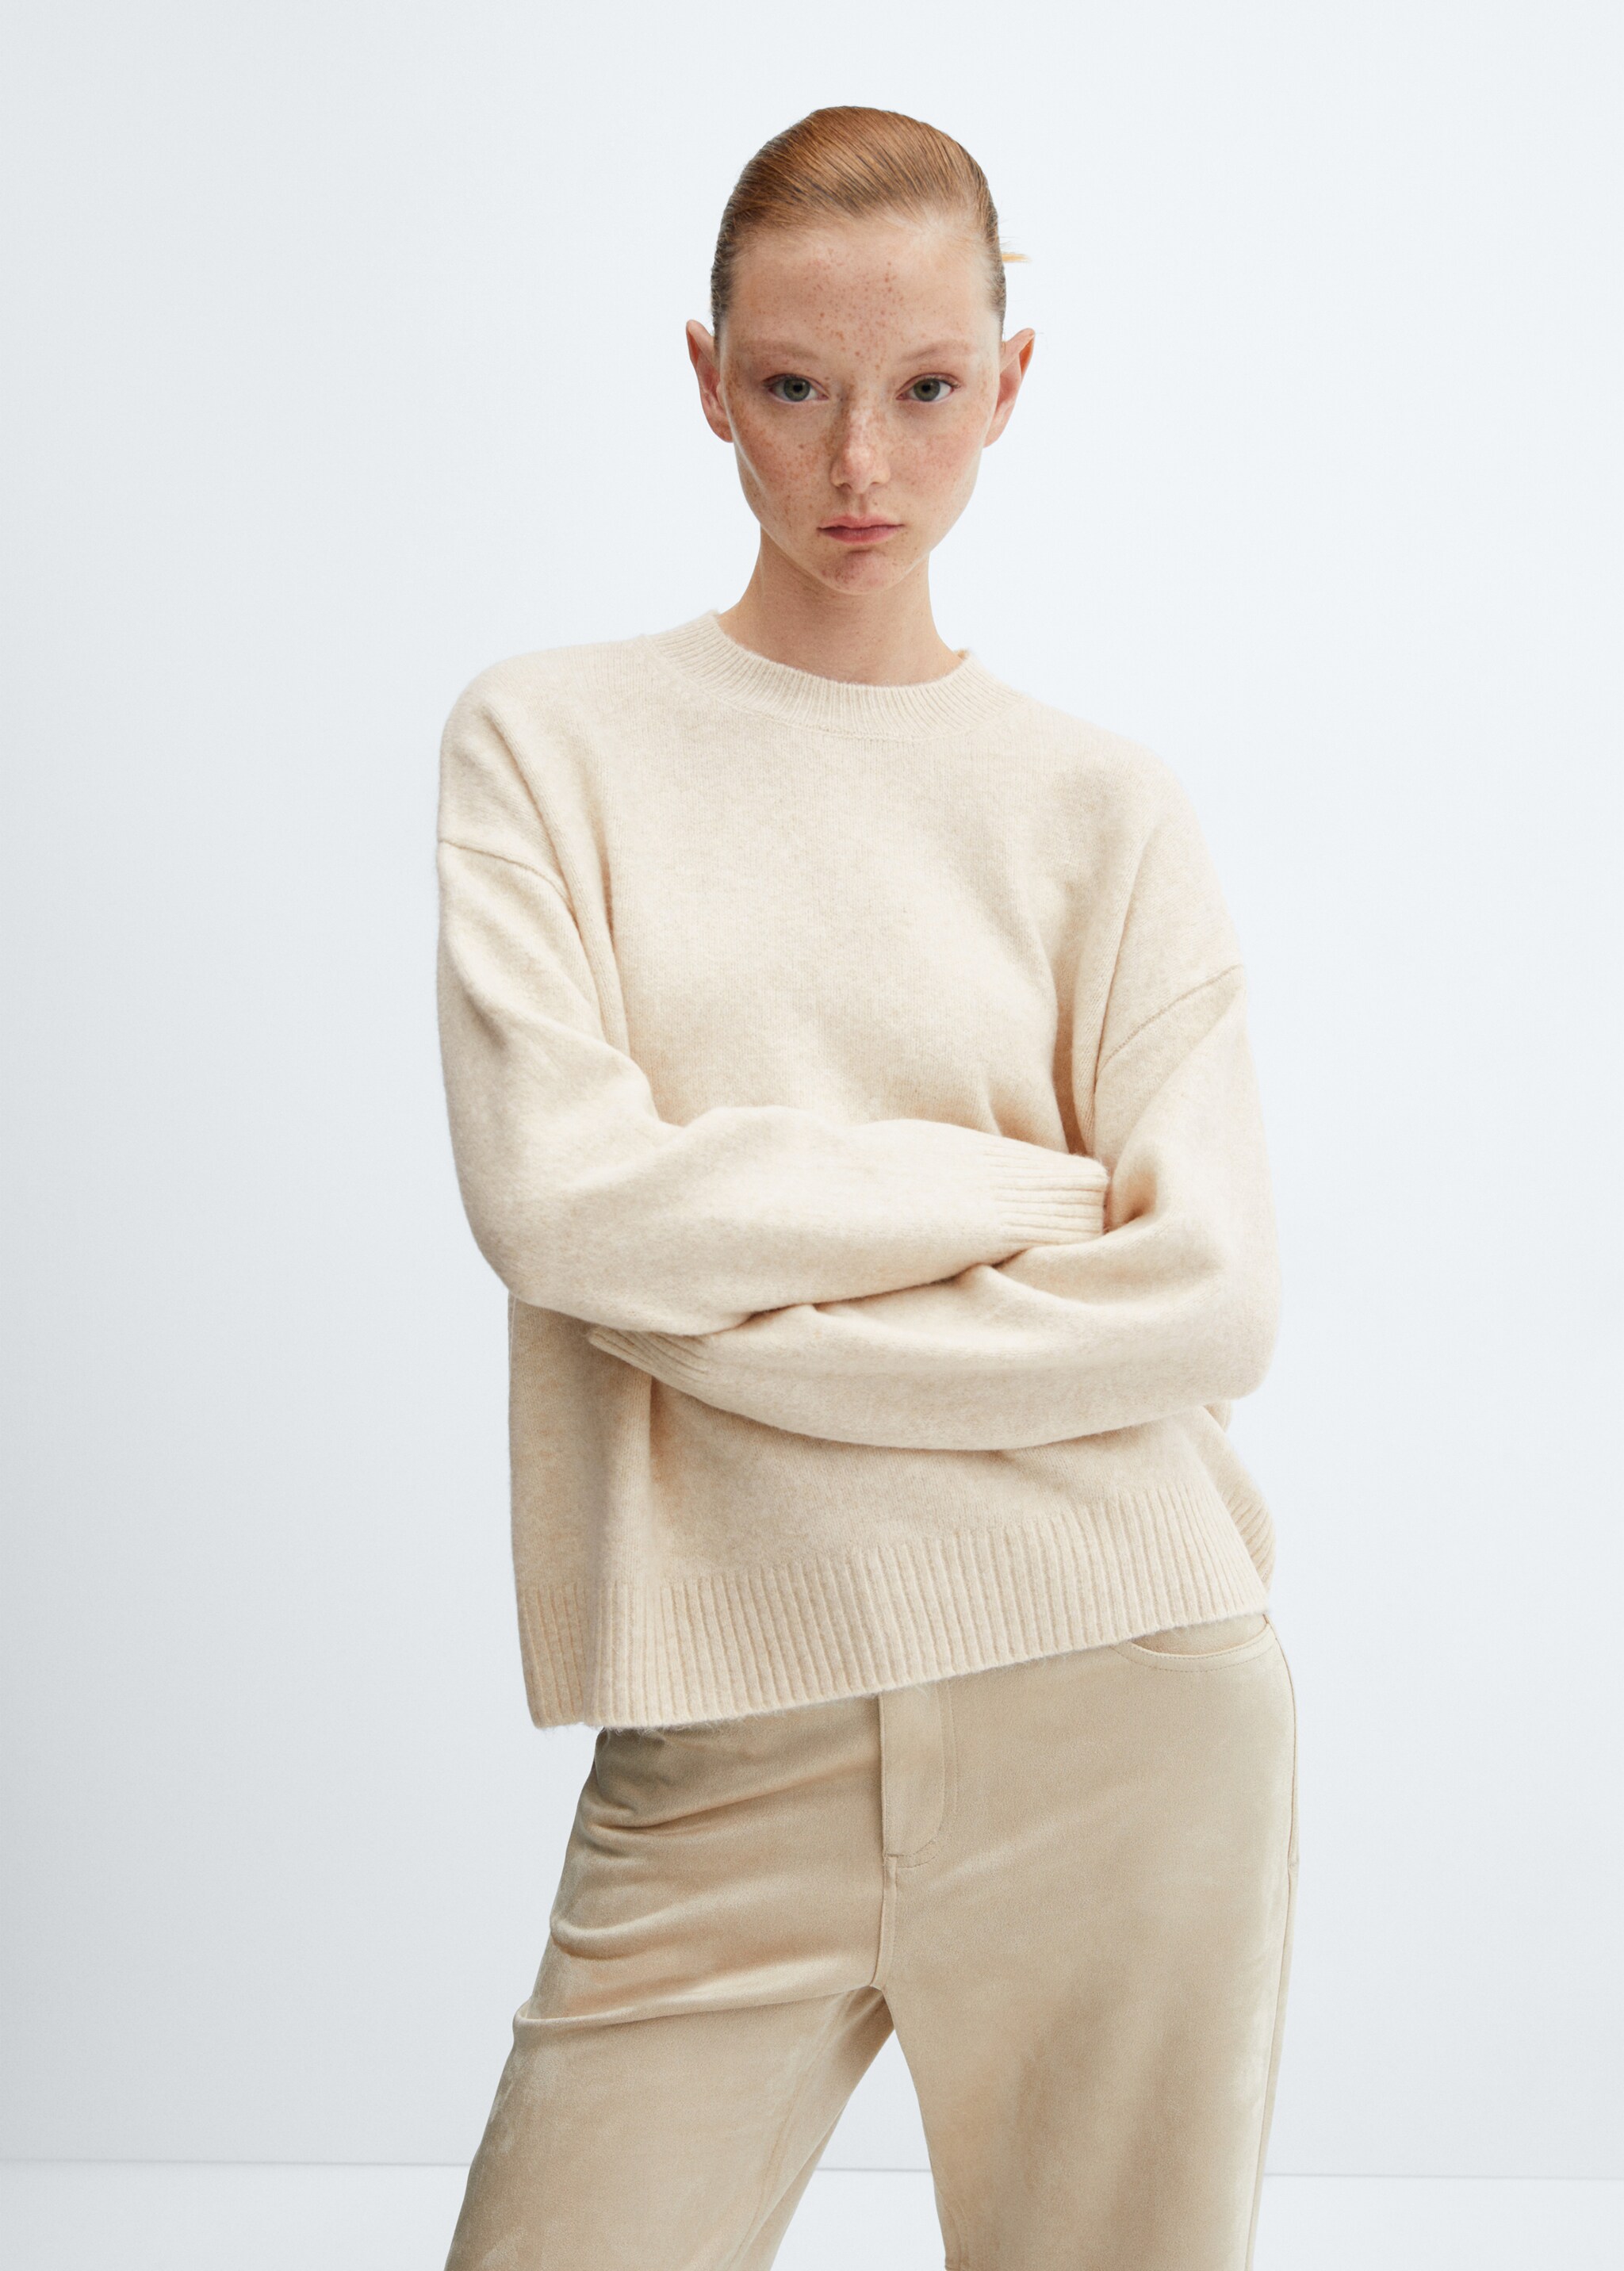 Round-neck knitted sweater  - Middenvlak